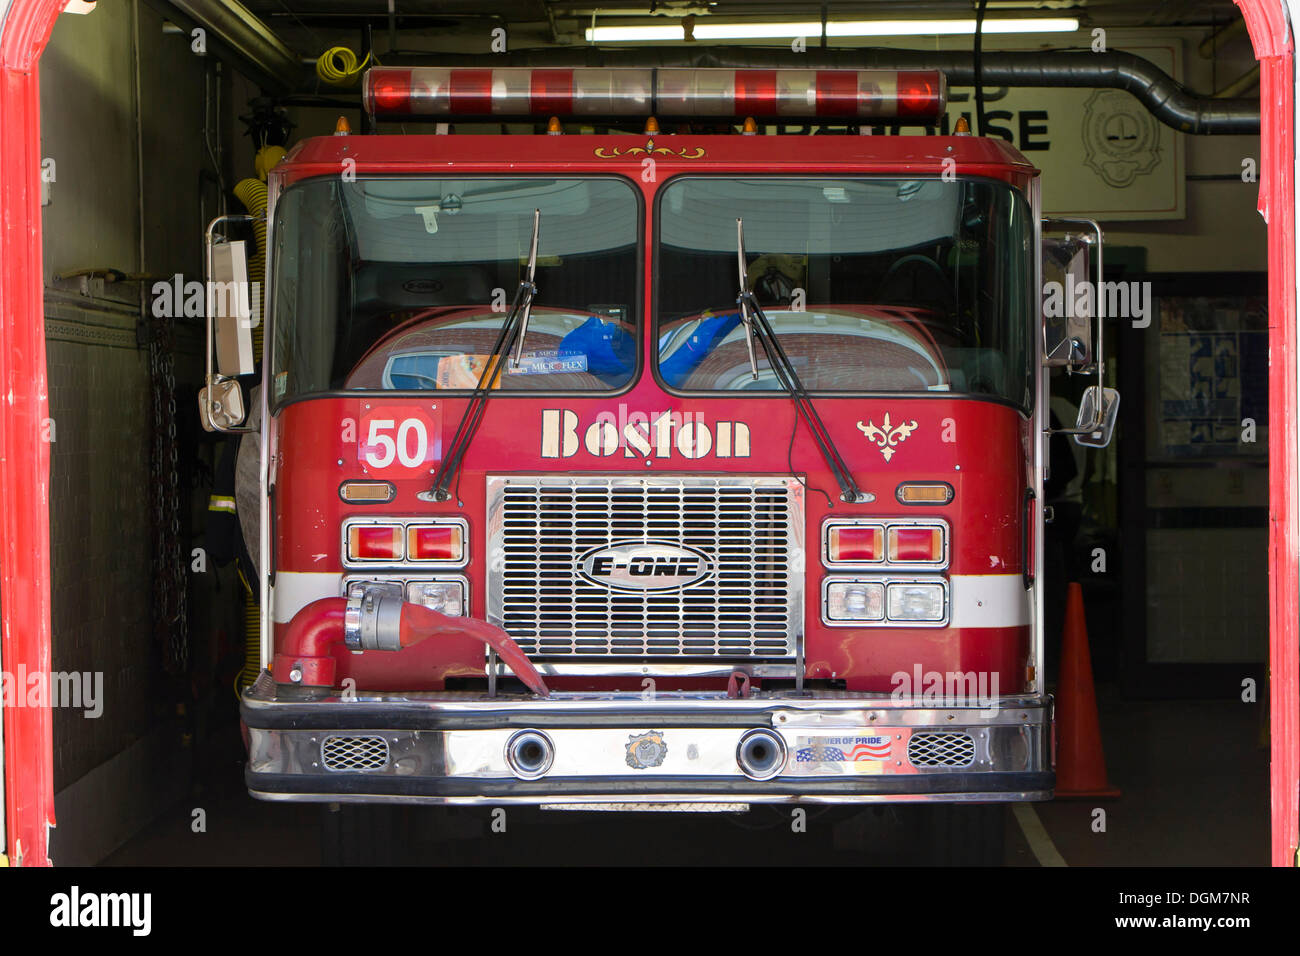 File:Engine 41 Boston Fire Department 09222015.jpg - Wikipedia